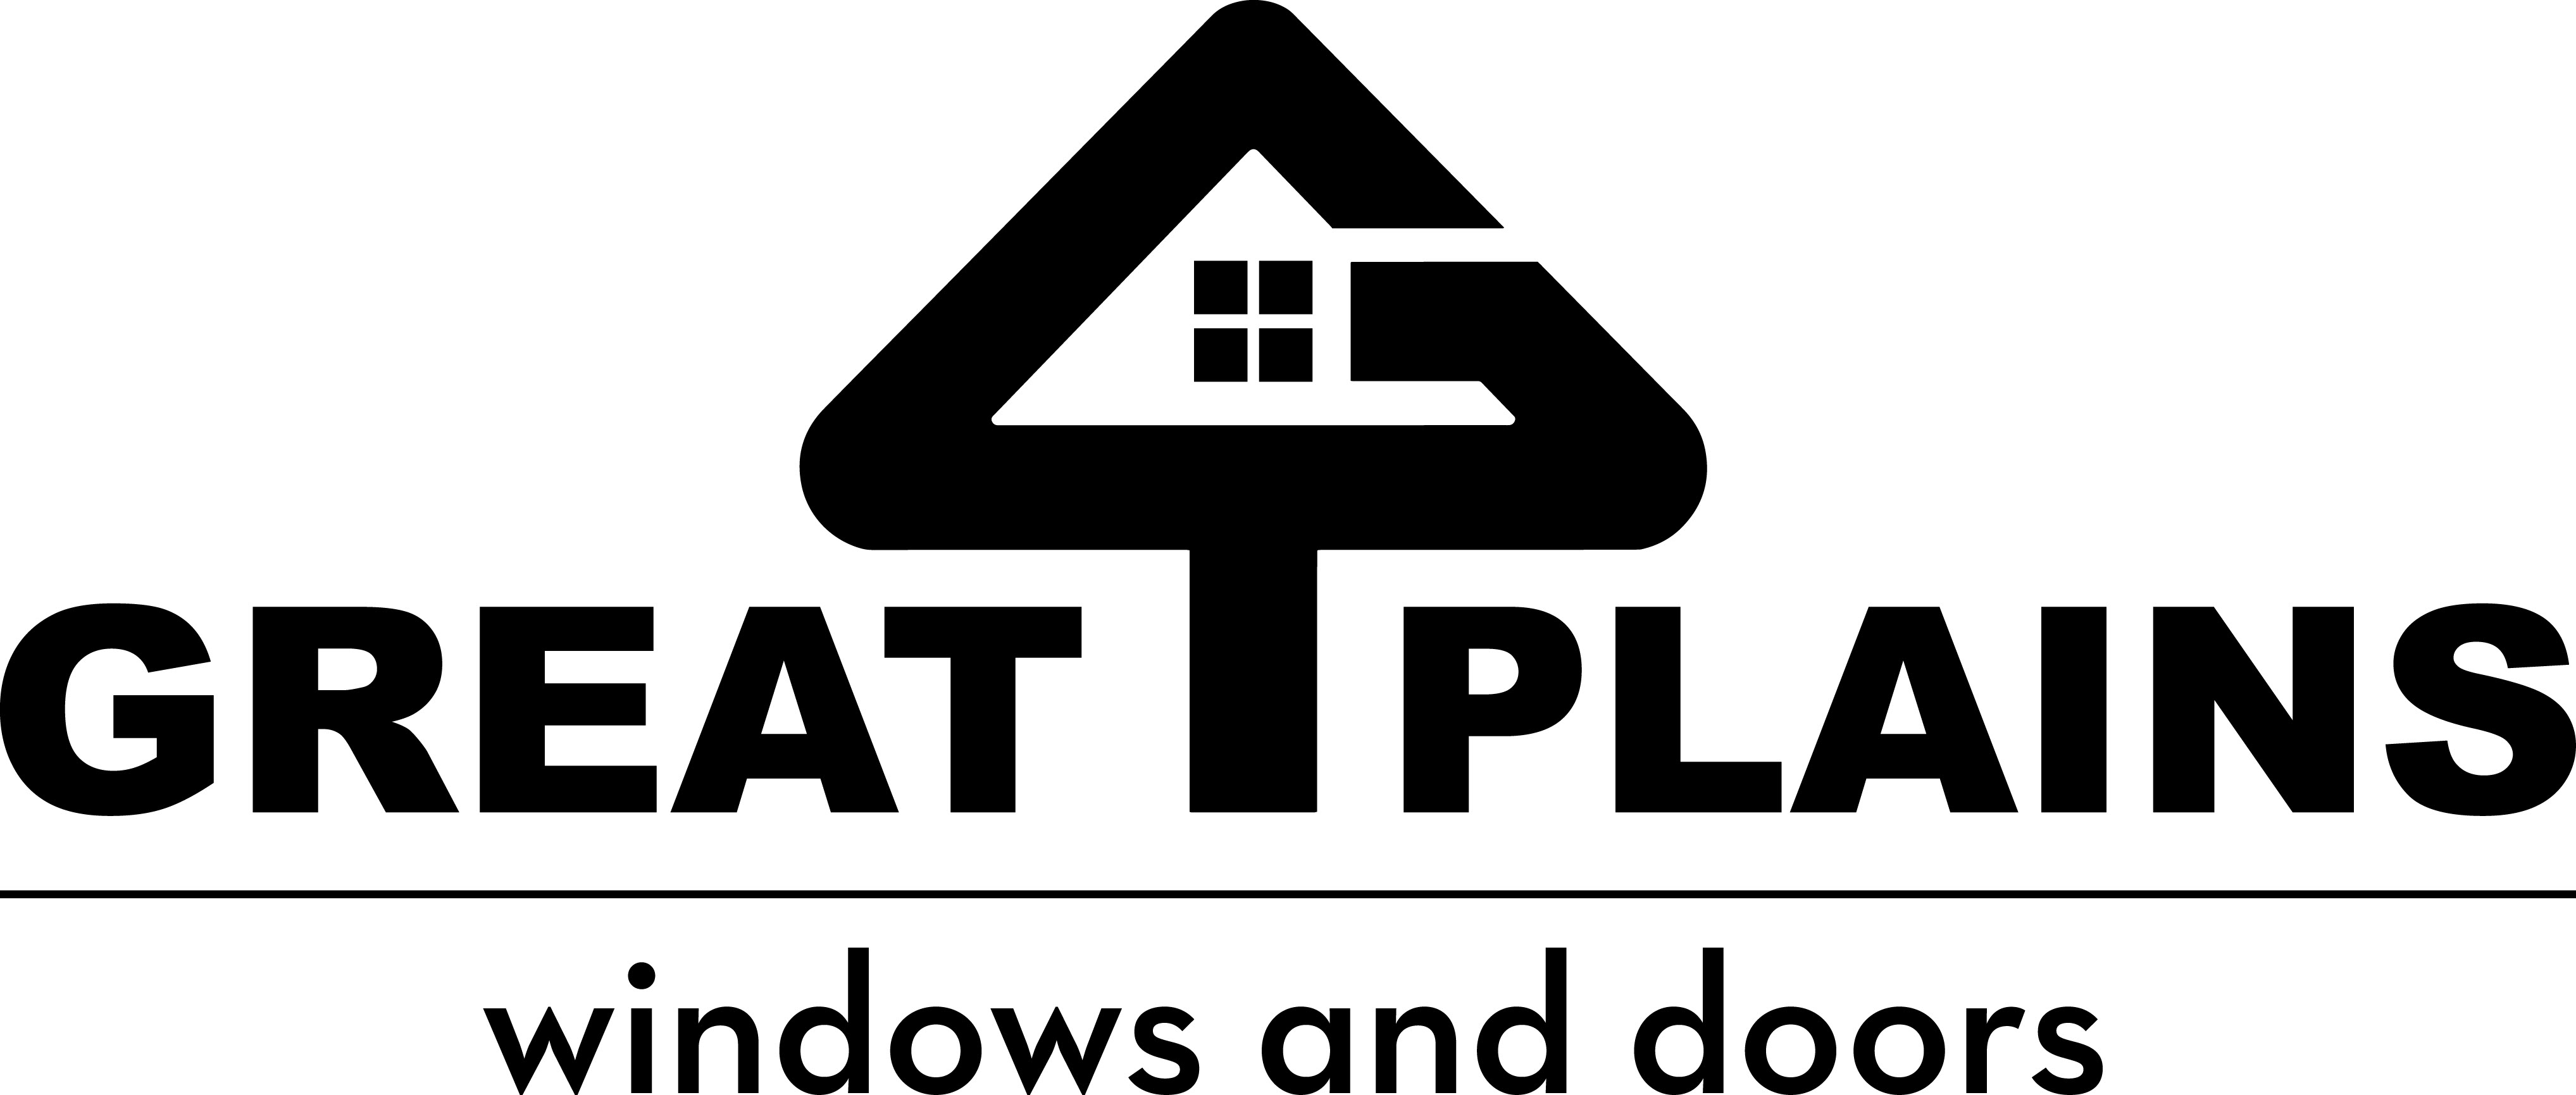 Great Plains Windows and Doors Logo